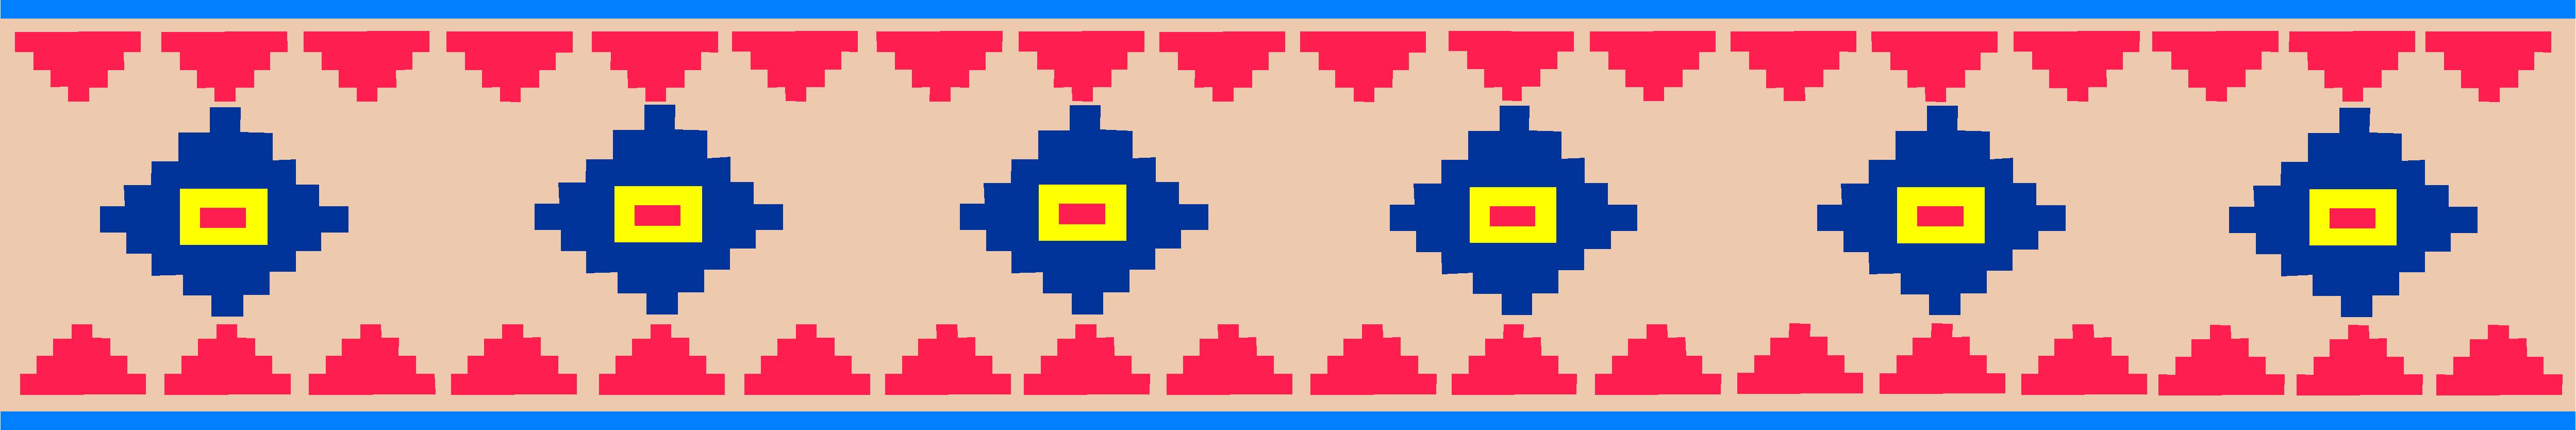 Башкирский орнамент на флаге